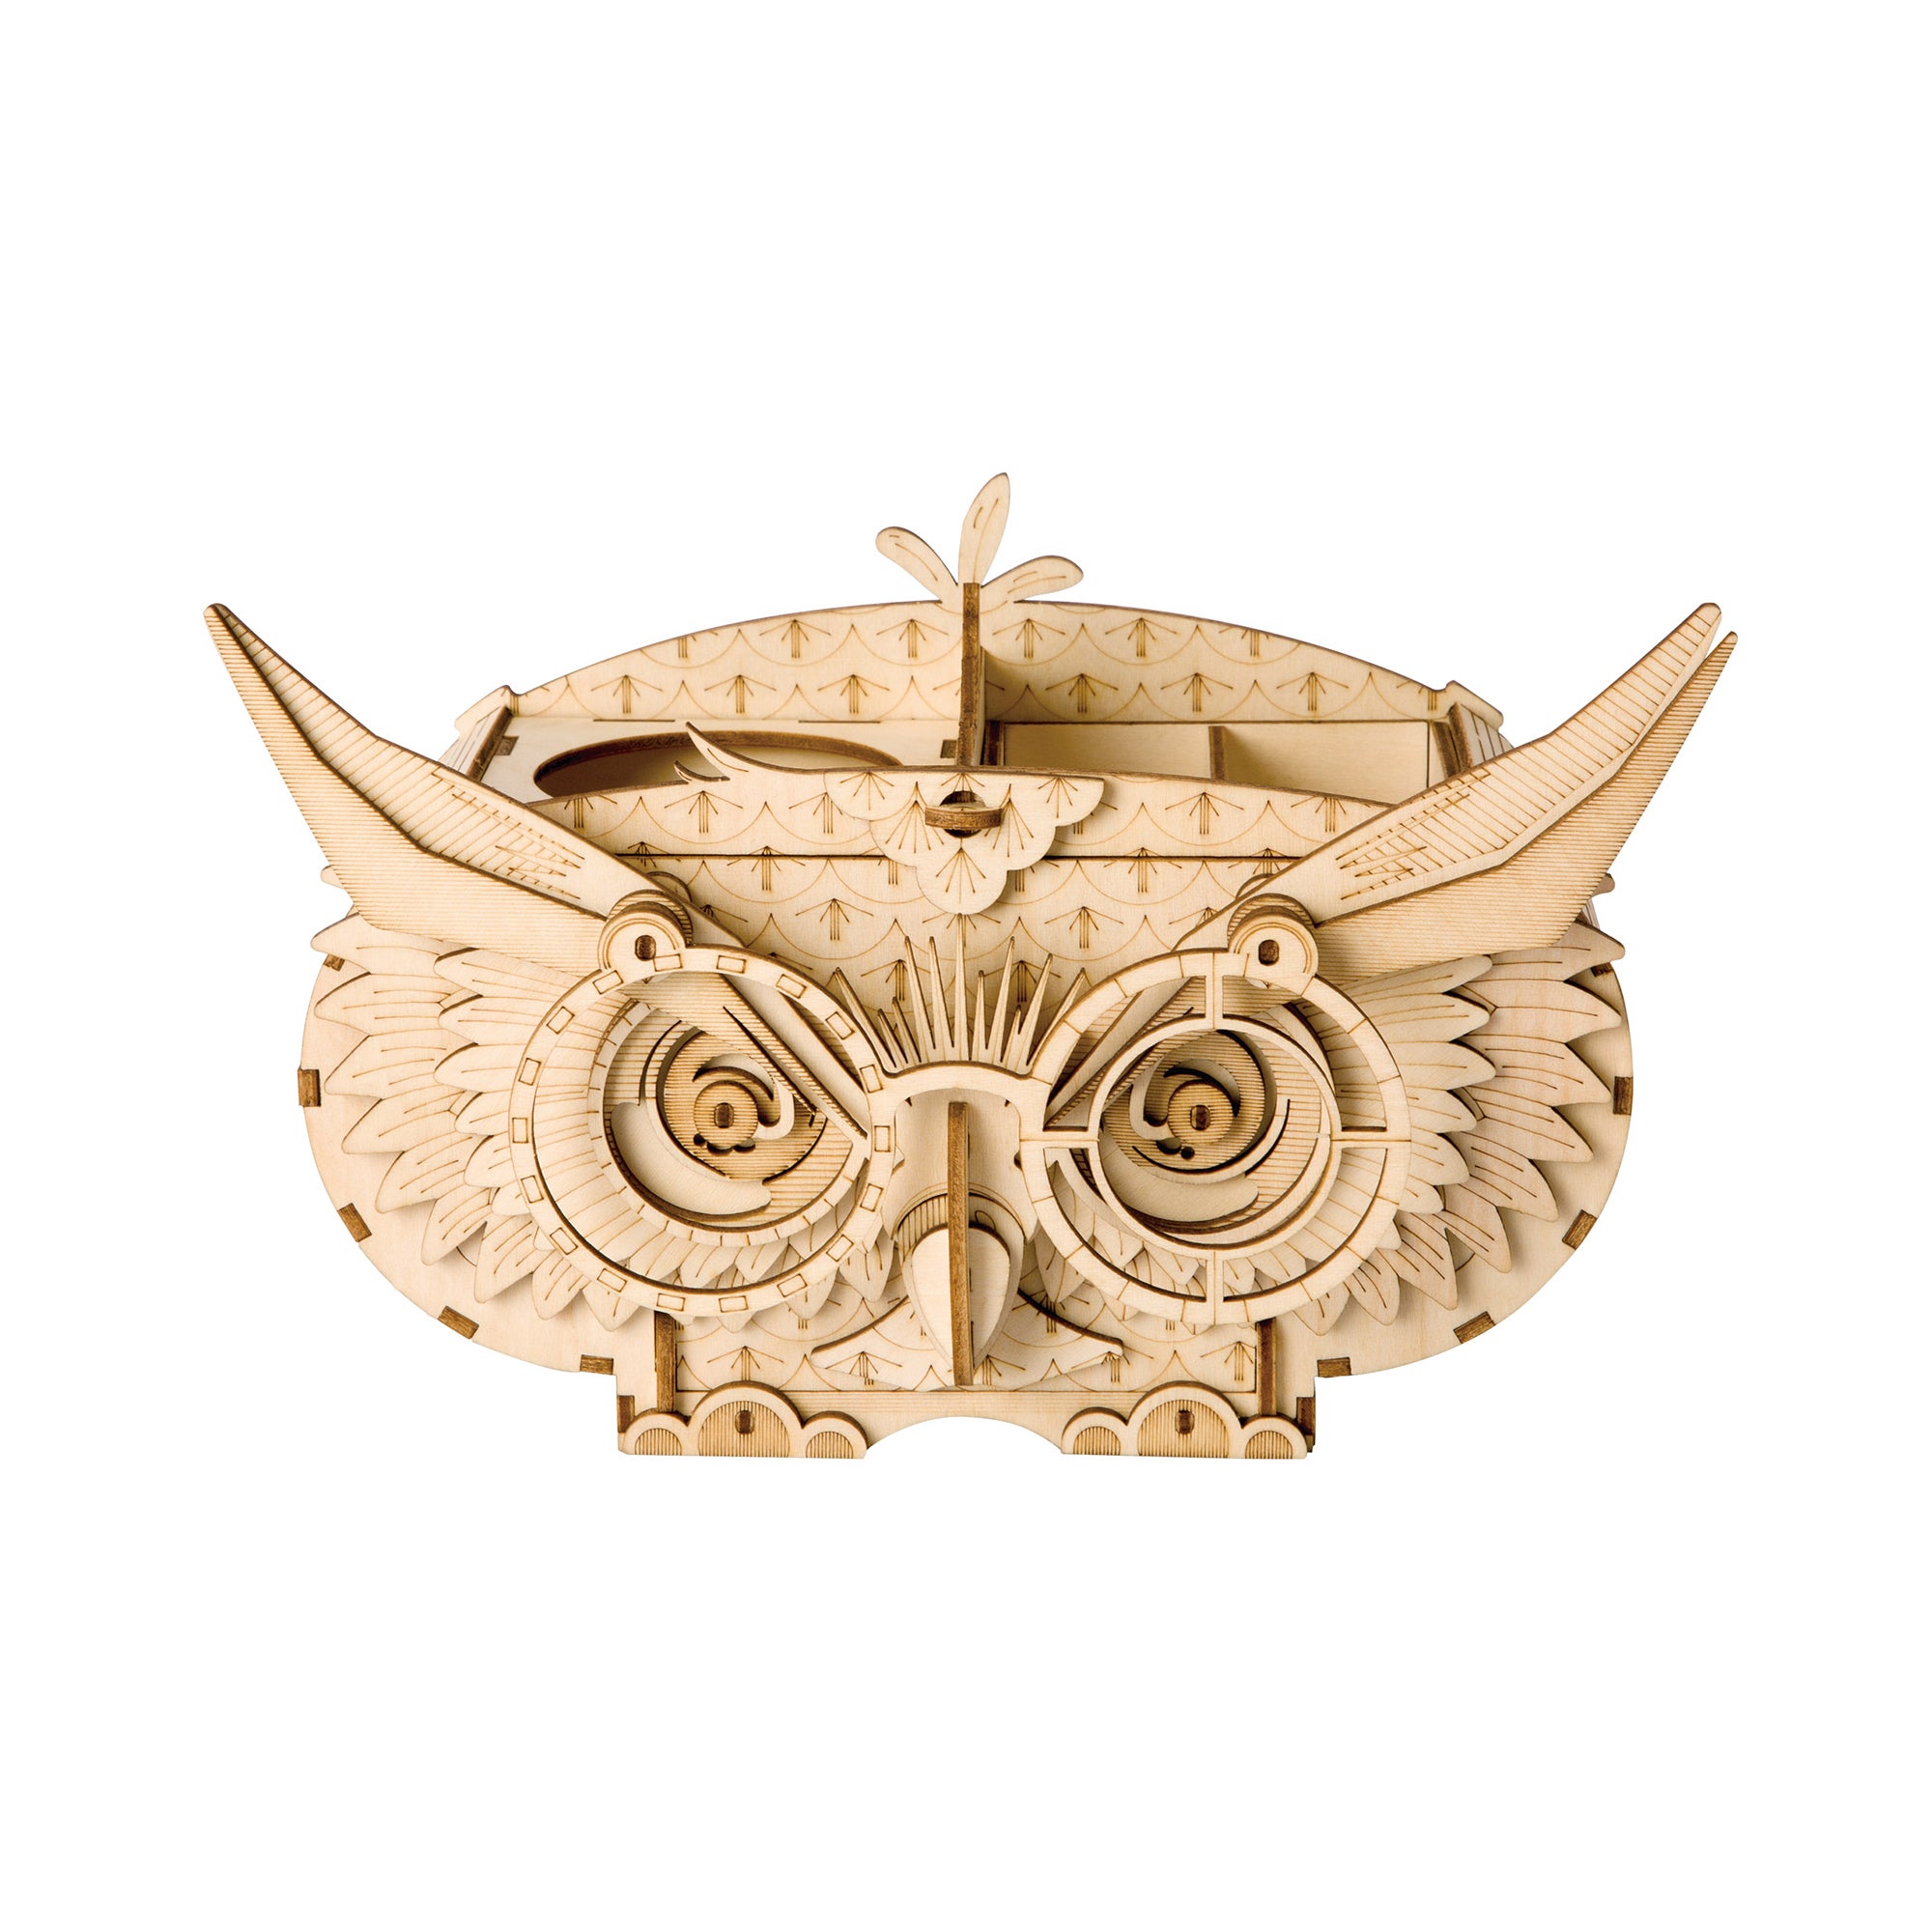 Owl Shortage Box DIY 3D Wood Laser Cut Puzzle